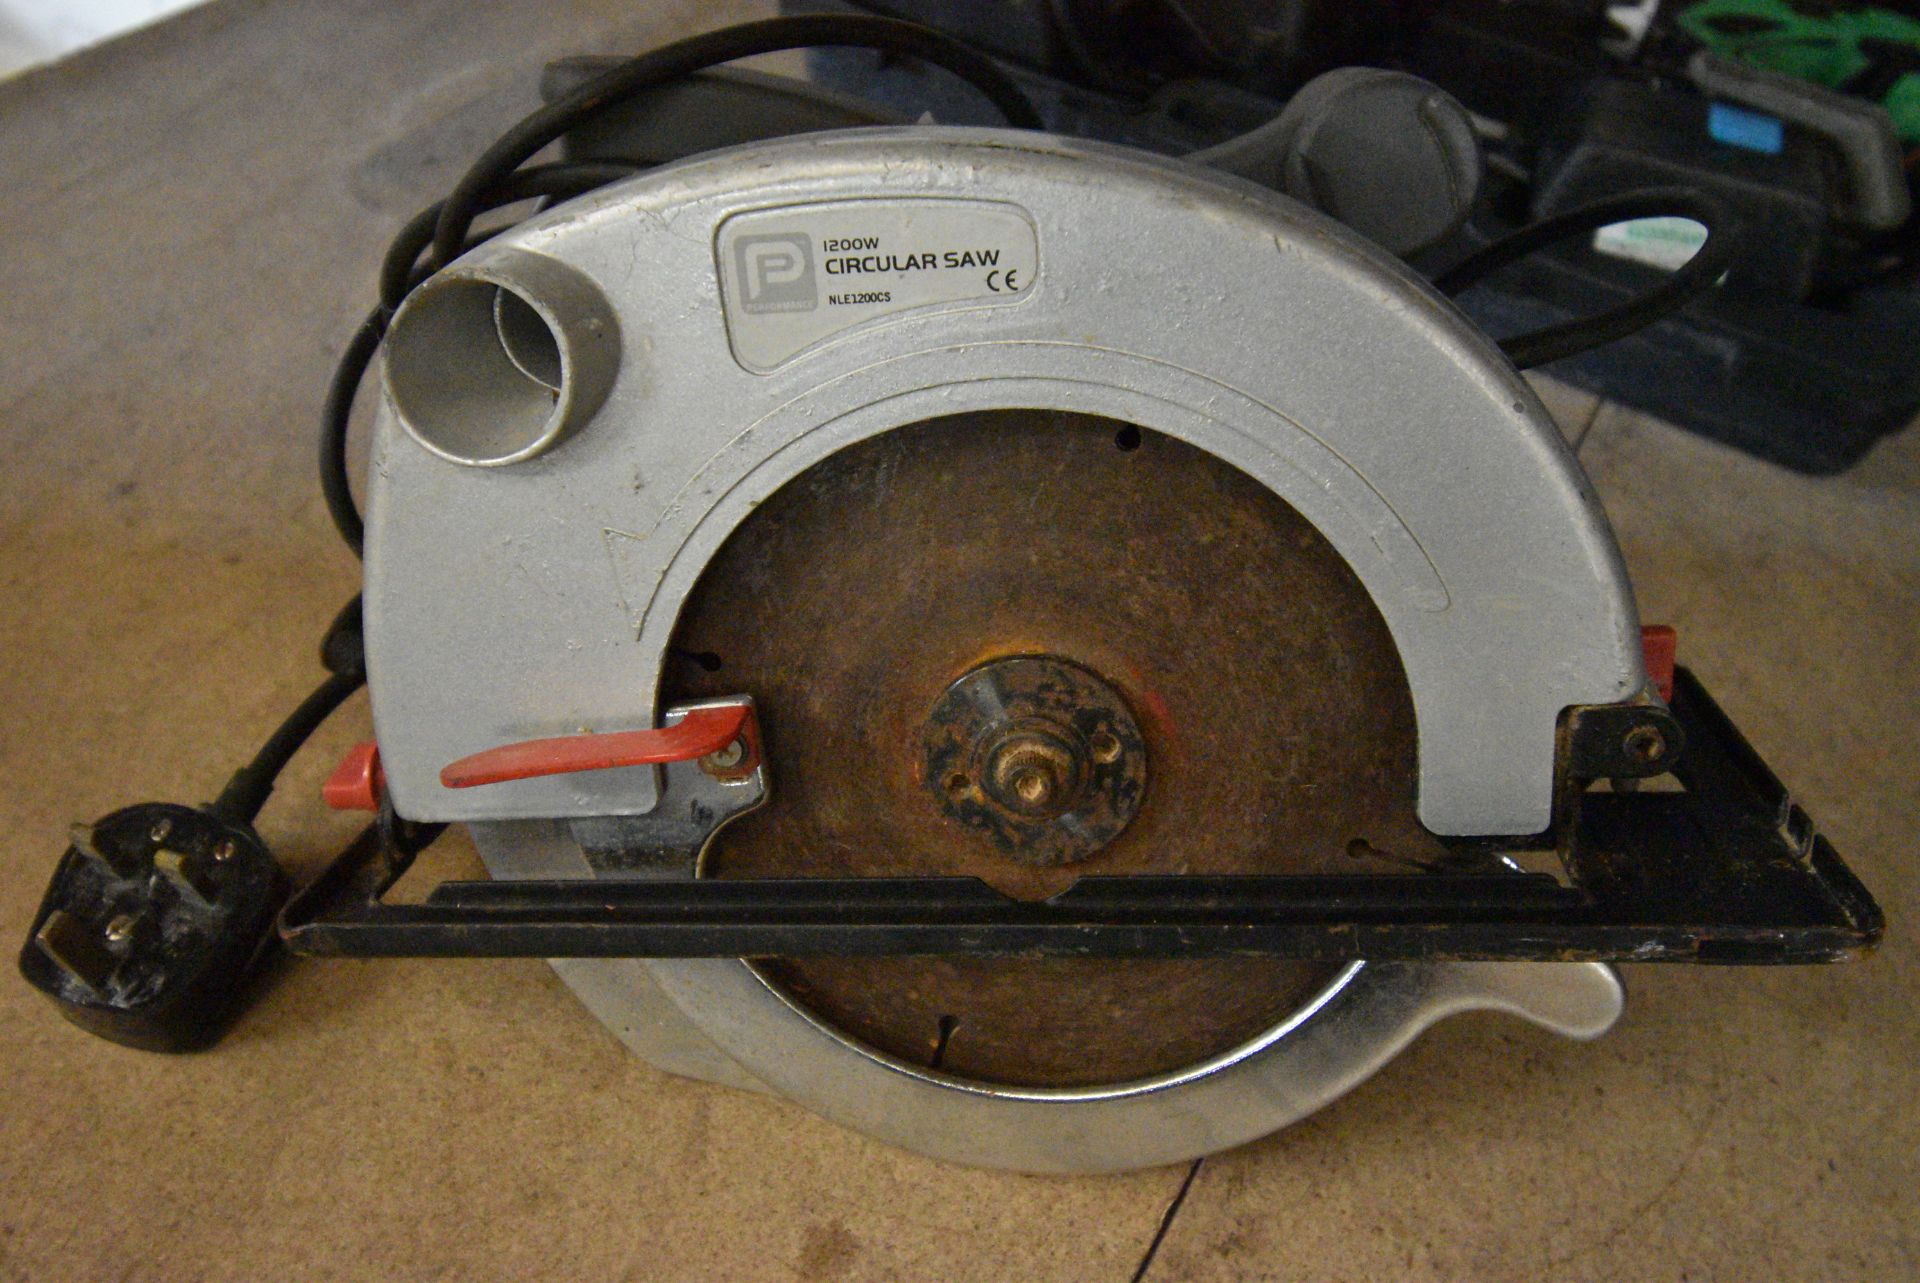 Performance Power 240v Circular Saw - Image 2 of 3